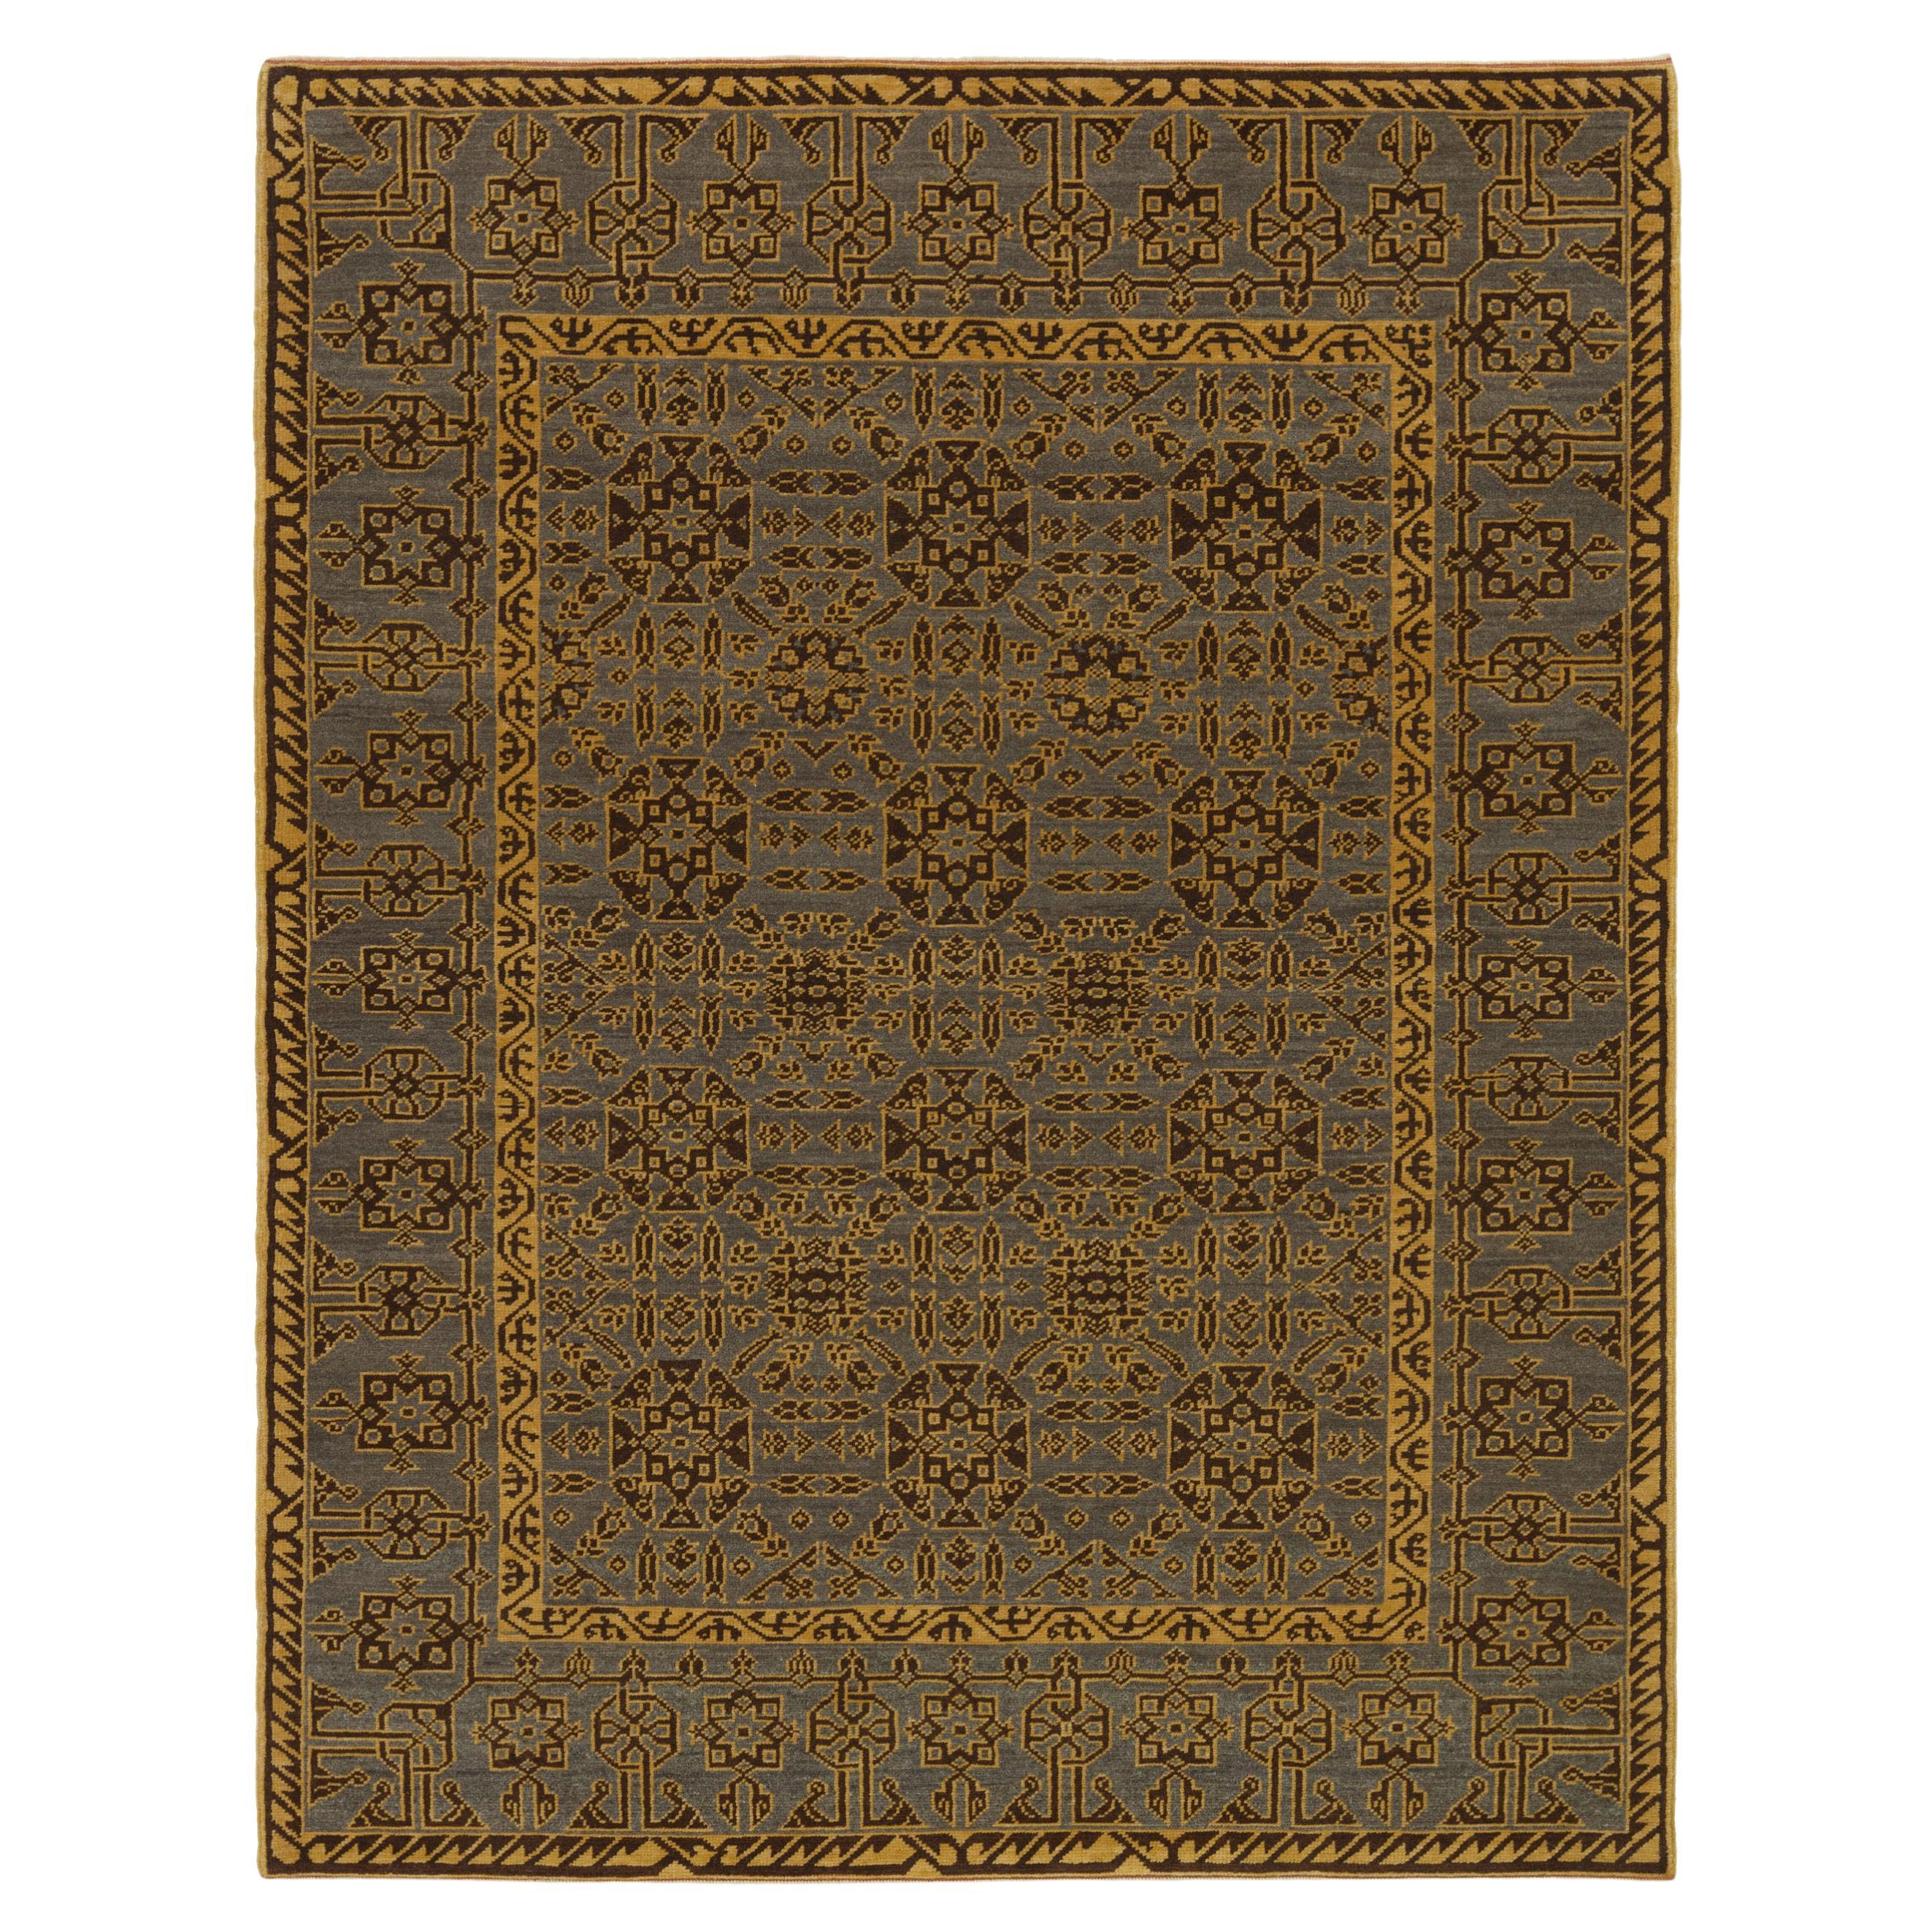 Ararat Rugs The Divrigi Ulu Mosque Carpet Anatolian Revival Rug, Natural Dyed For Sale